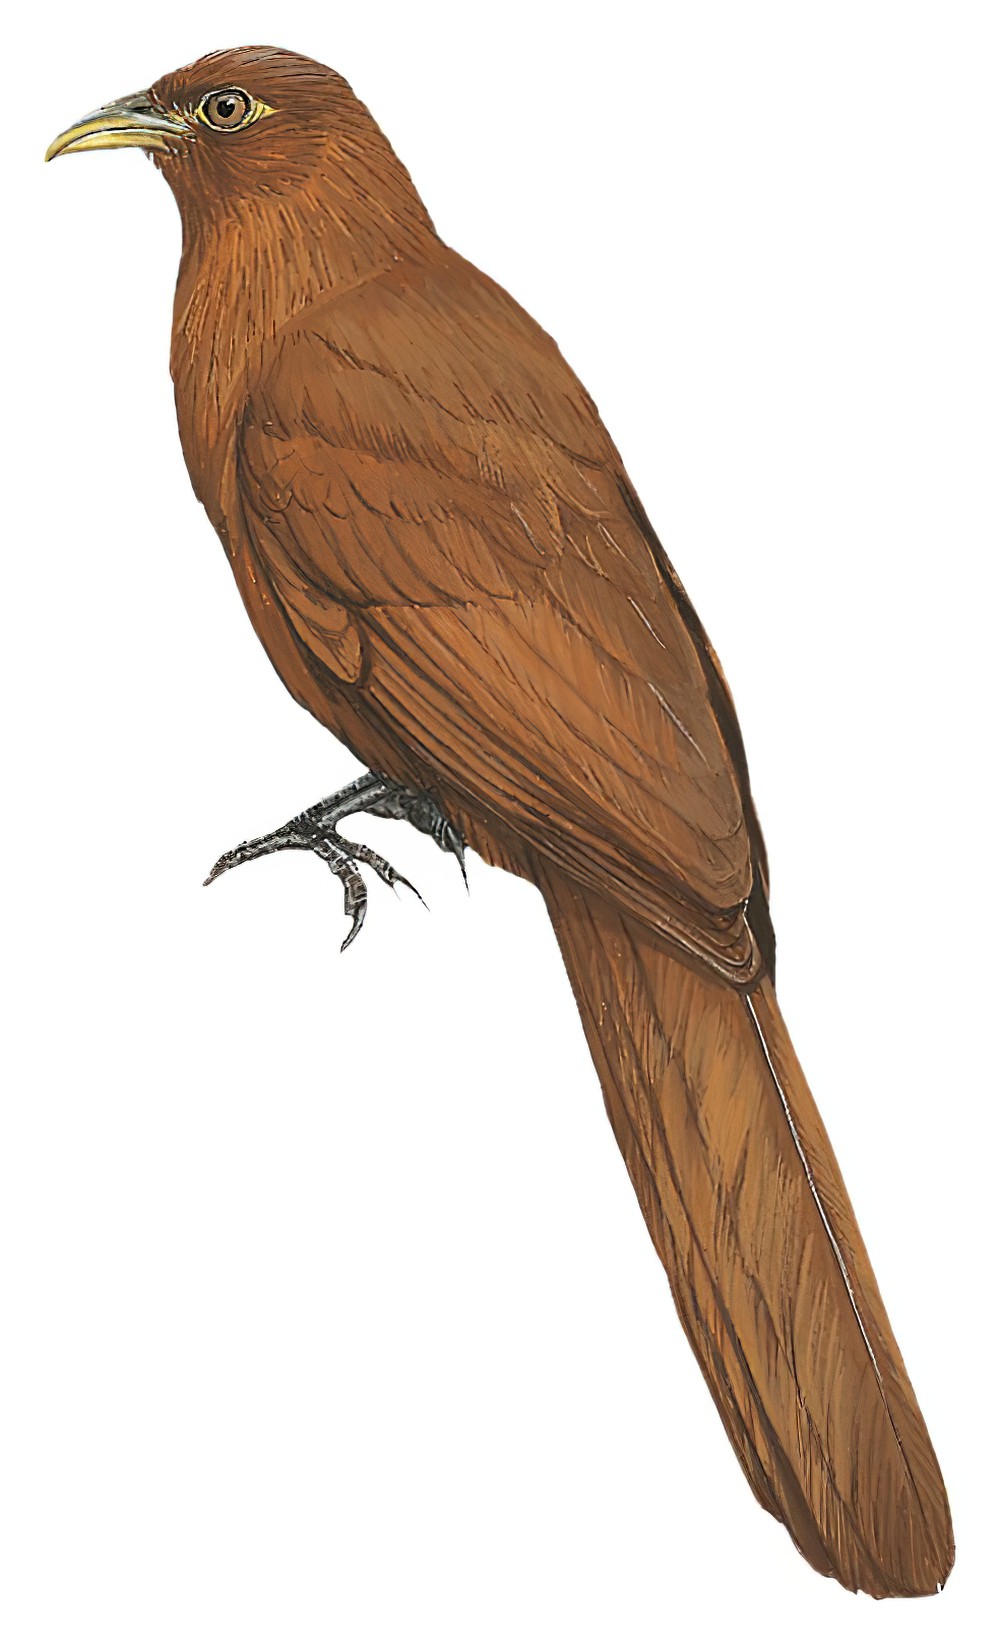 Rufous Coucal / Centropus unirufus